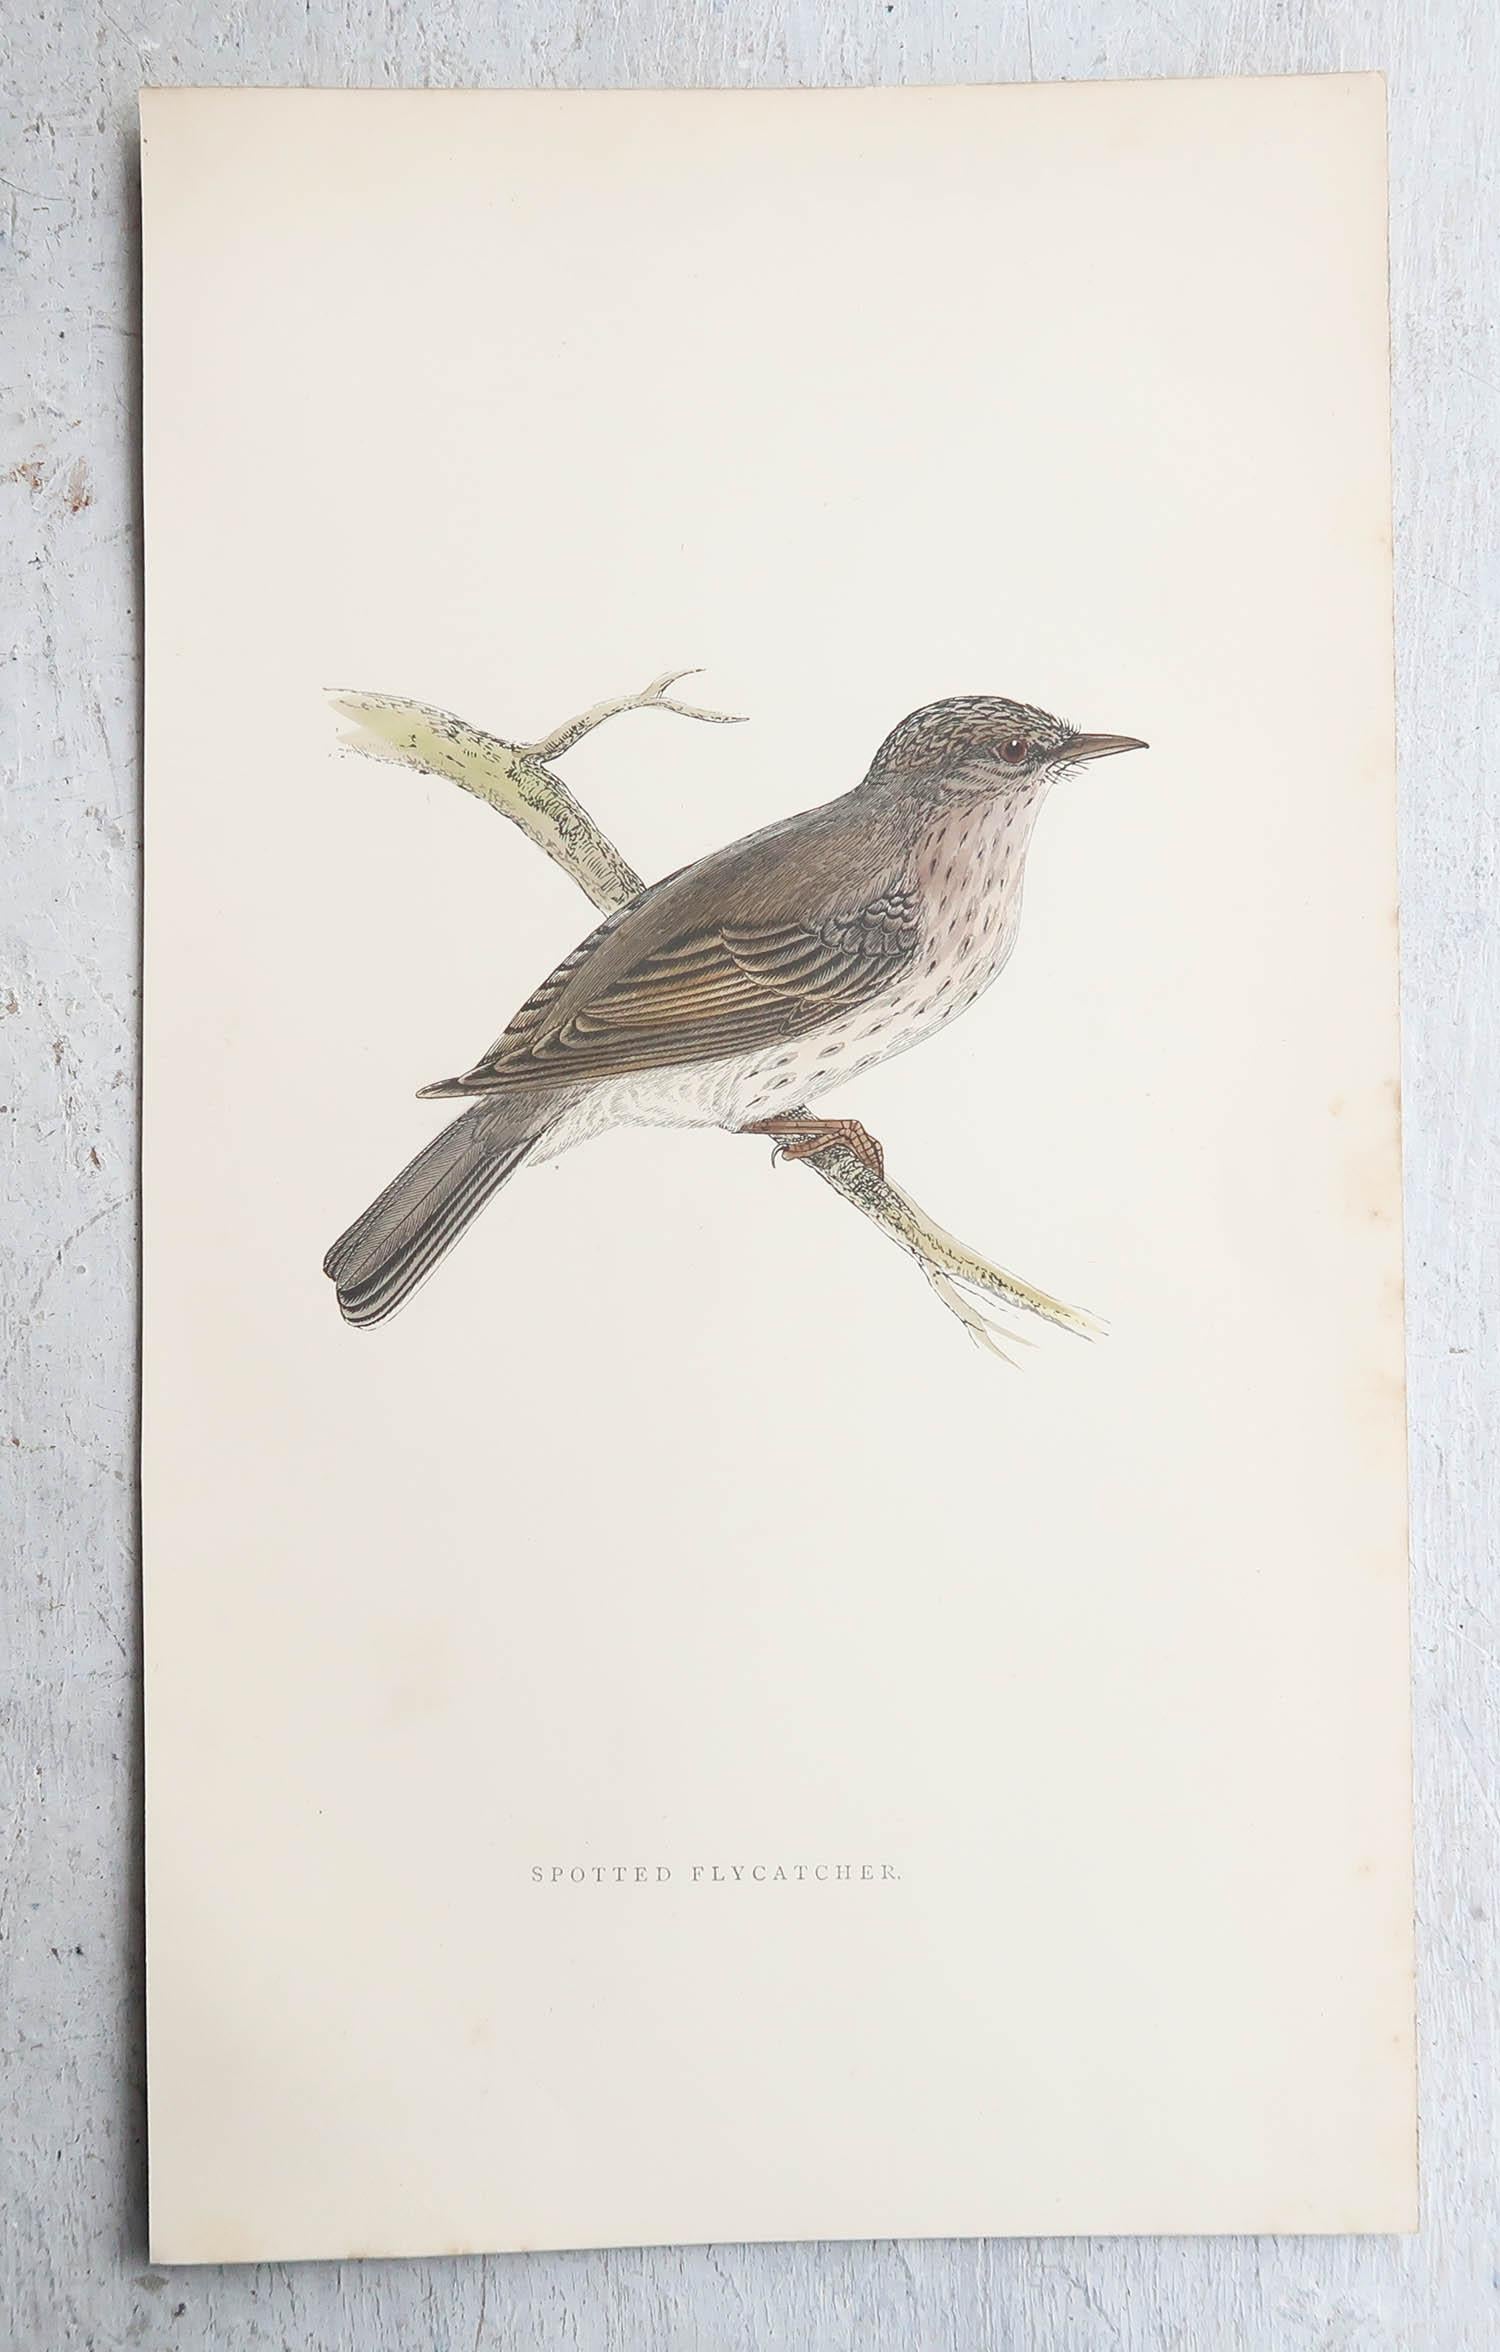 Folk Art Original Antique Print of a Spotted Flycatcher, circa 1880, 'Unframed' For Sale